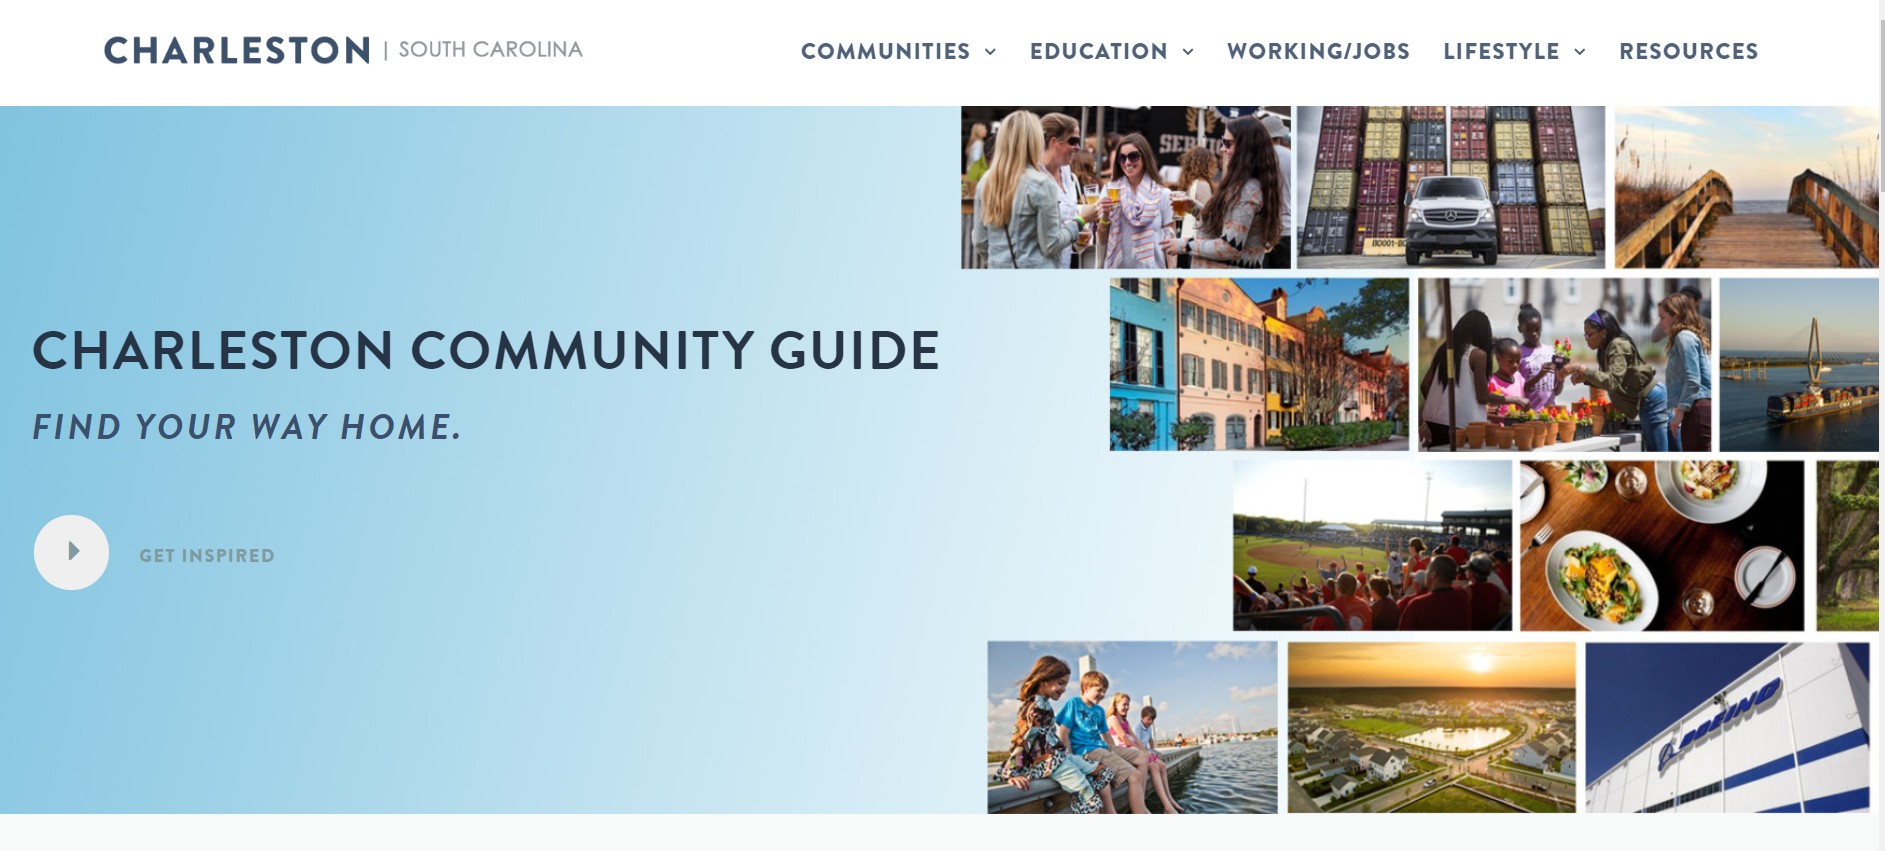 CHS Community Guide.jpg